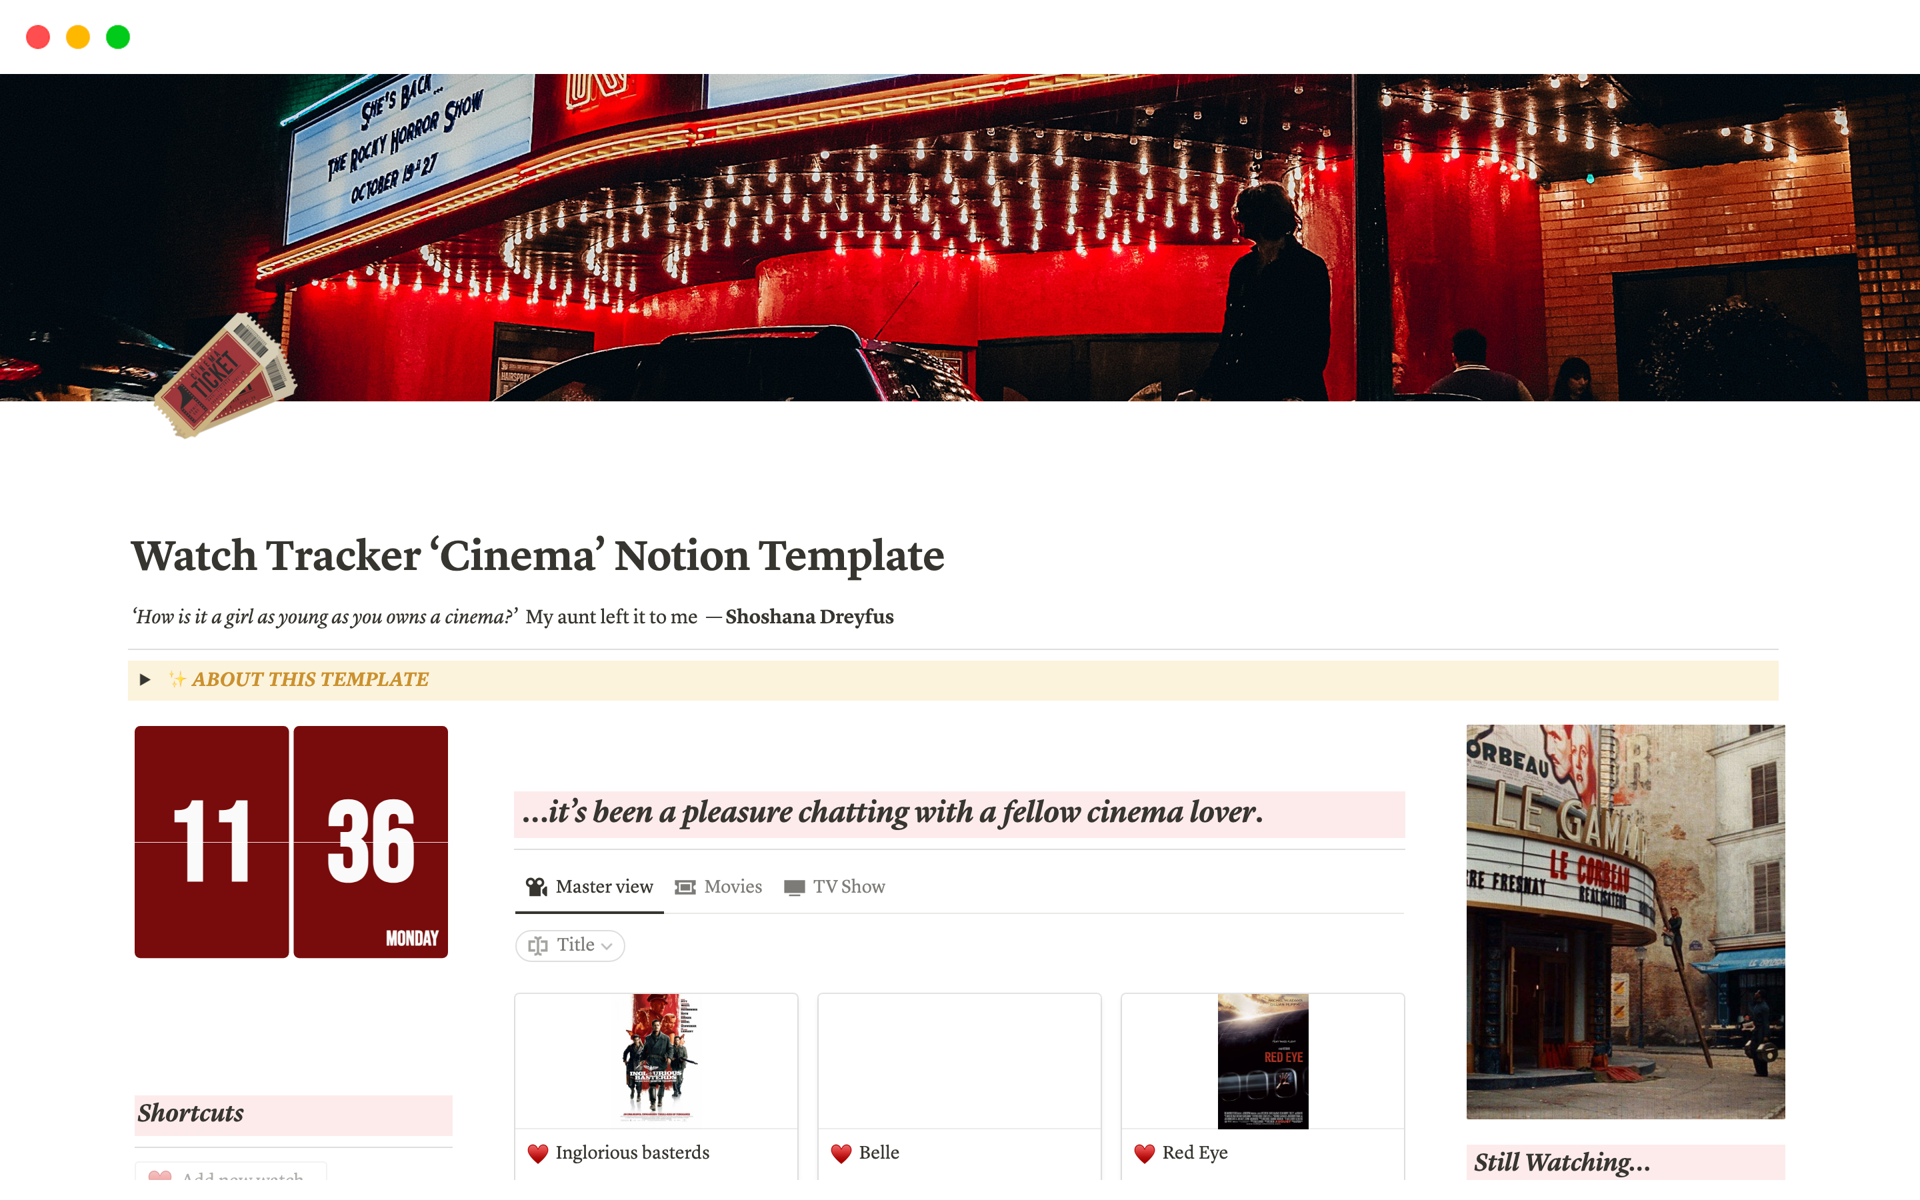 Aperçu du modèle de Watch Tracker ‘Cinema’ Notion Template